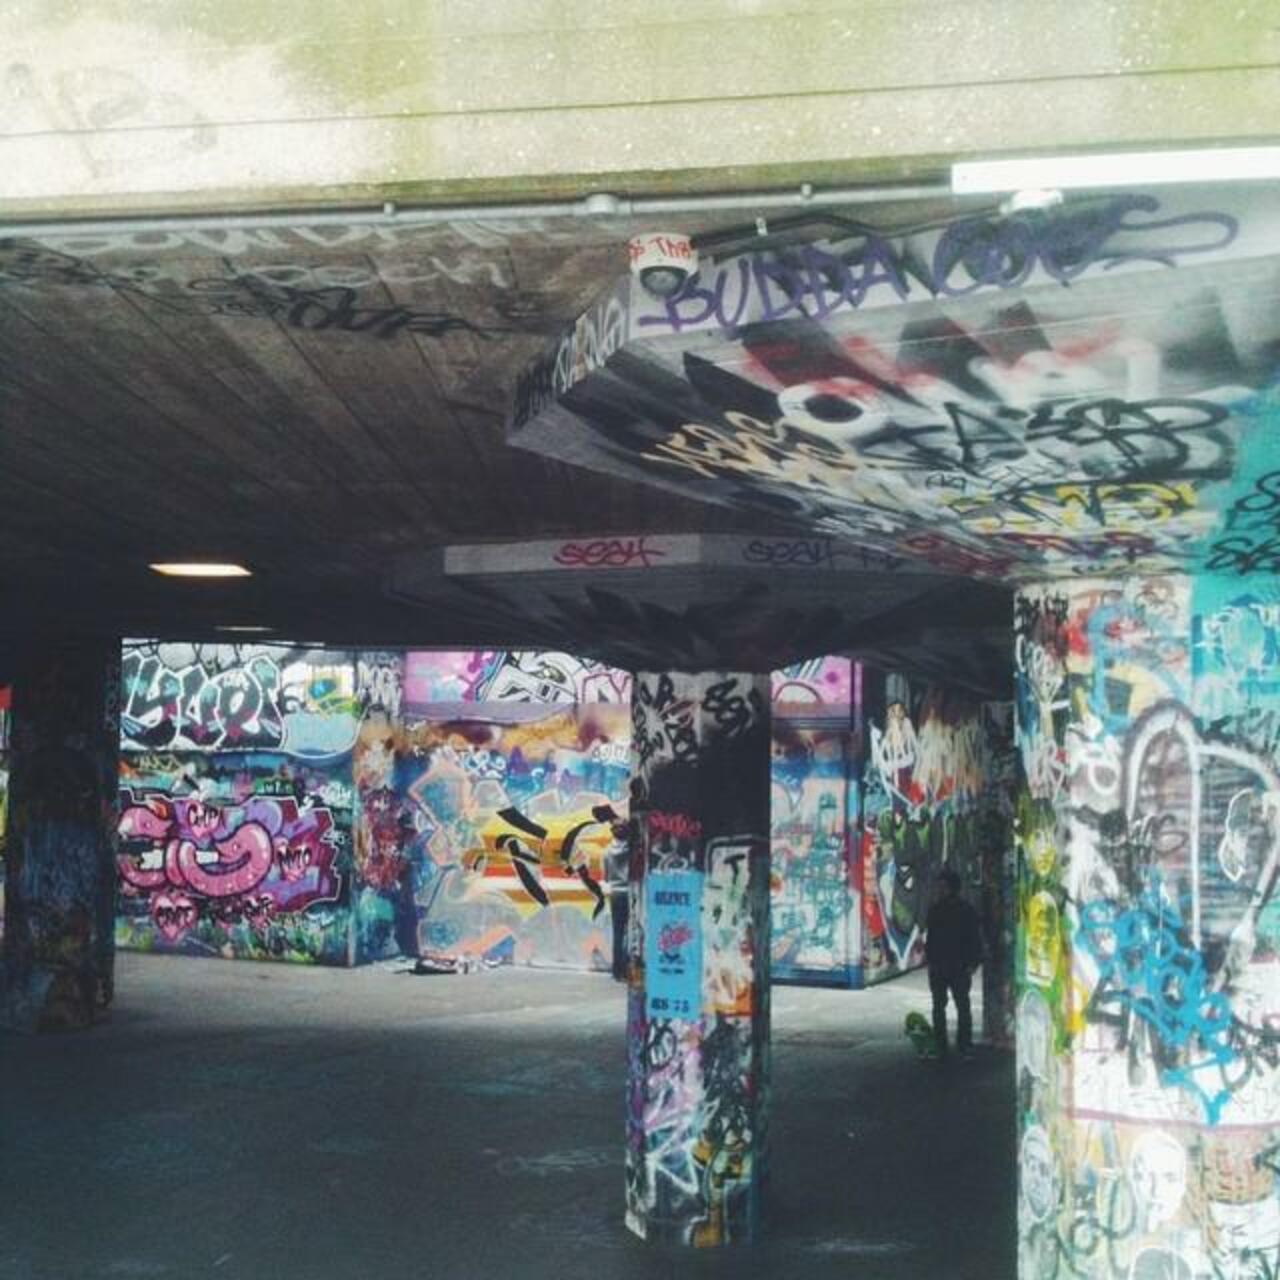 A good day #southbank #london #graffiti #streetart #spray #art #skateboarder #colour #sprayart #artist #pattern #vs… http://t.co/5CvqKMlCMm